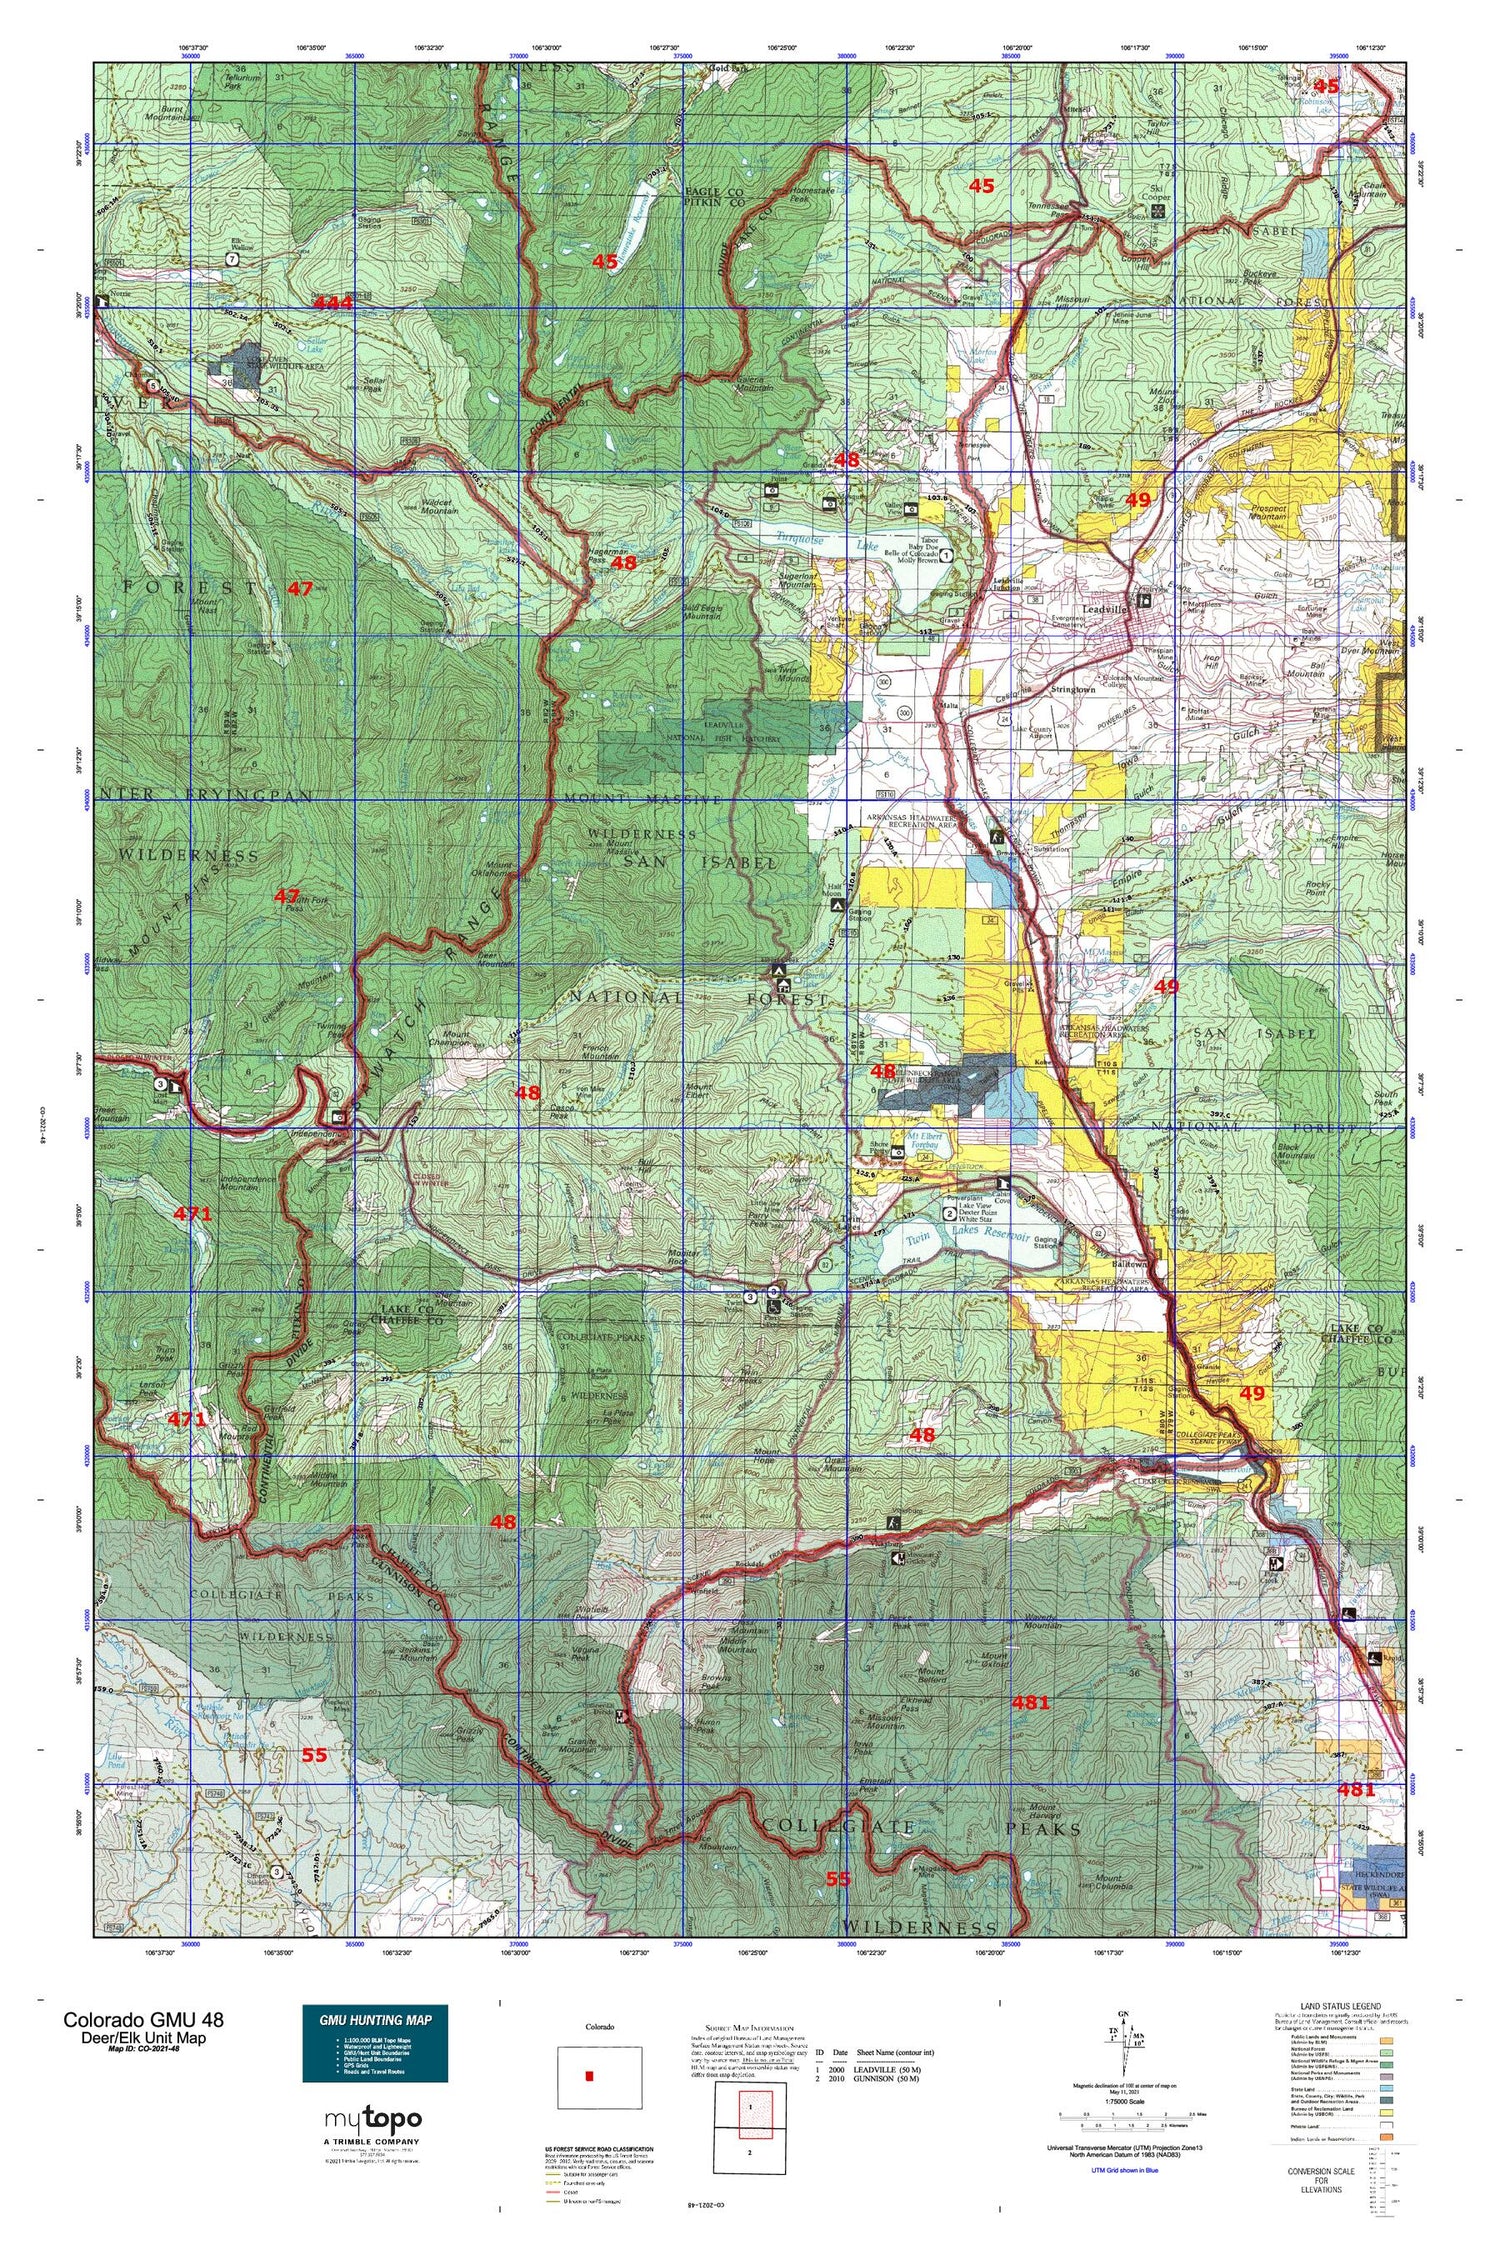 Colorado GMU 48 Map Image